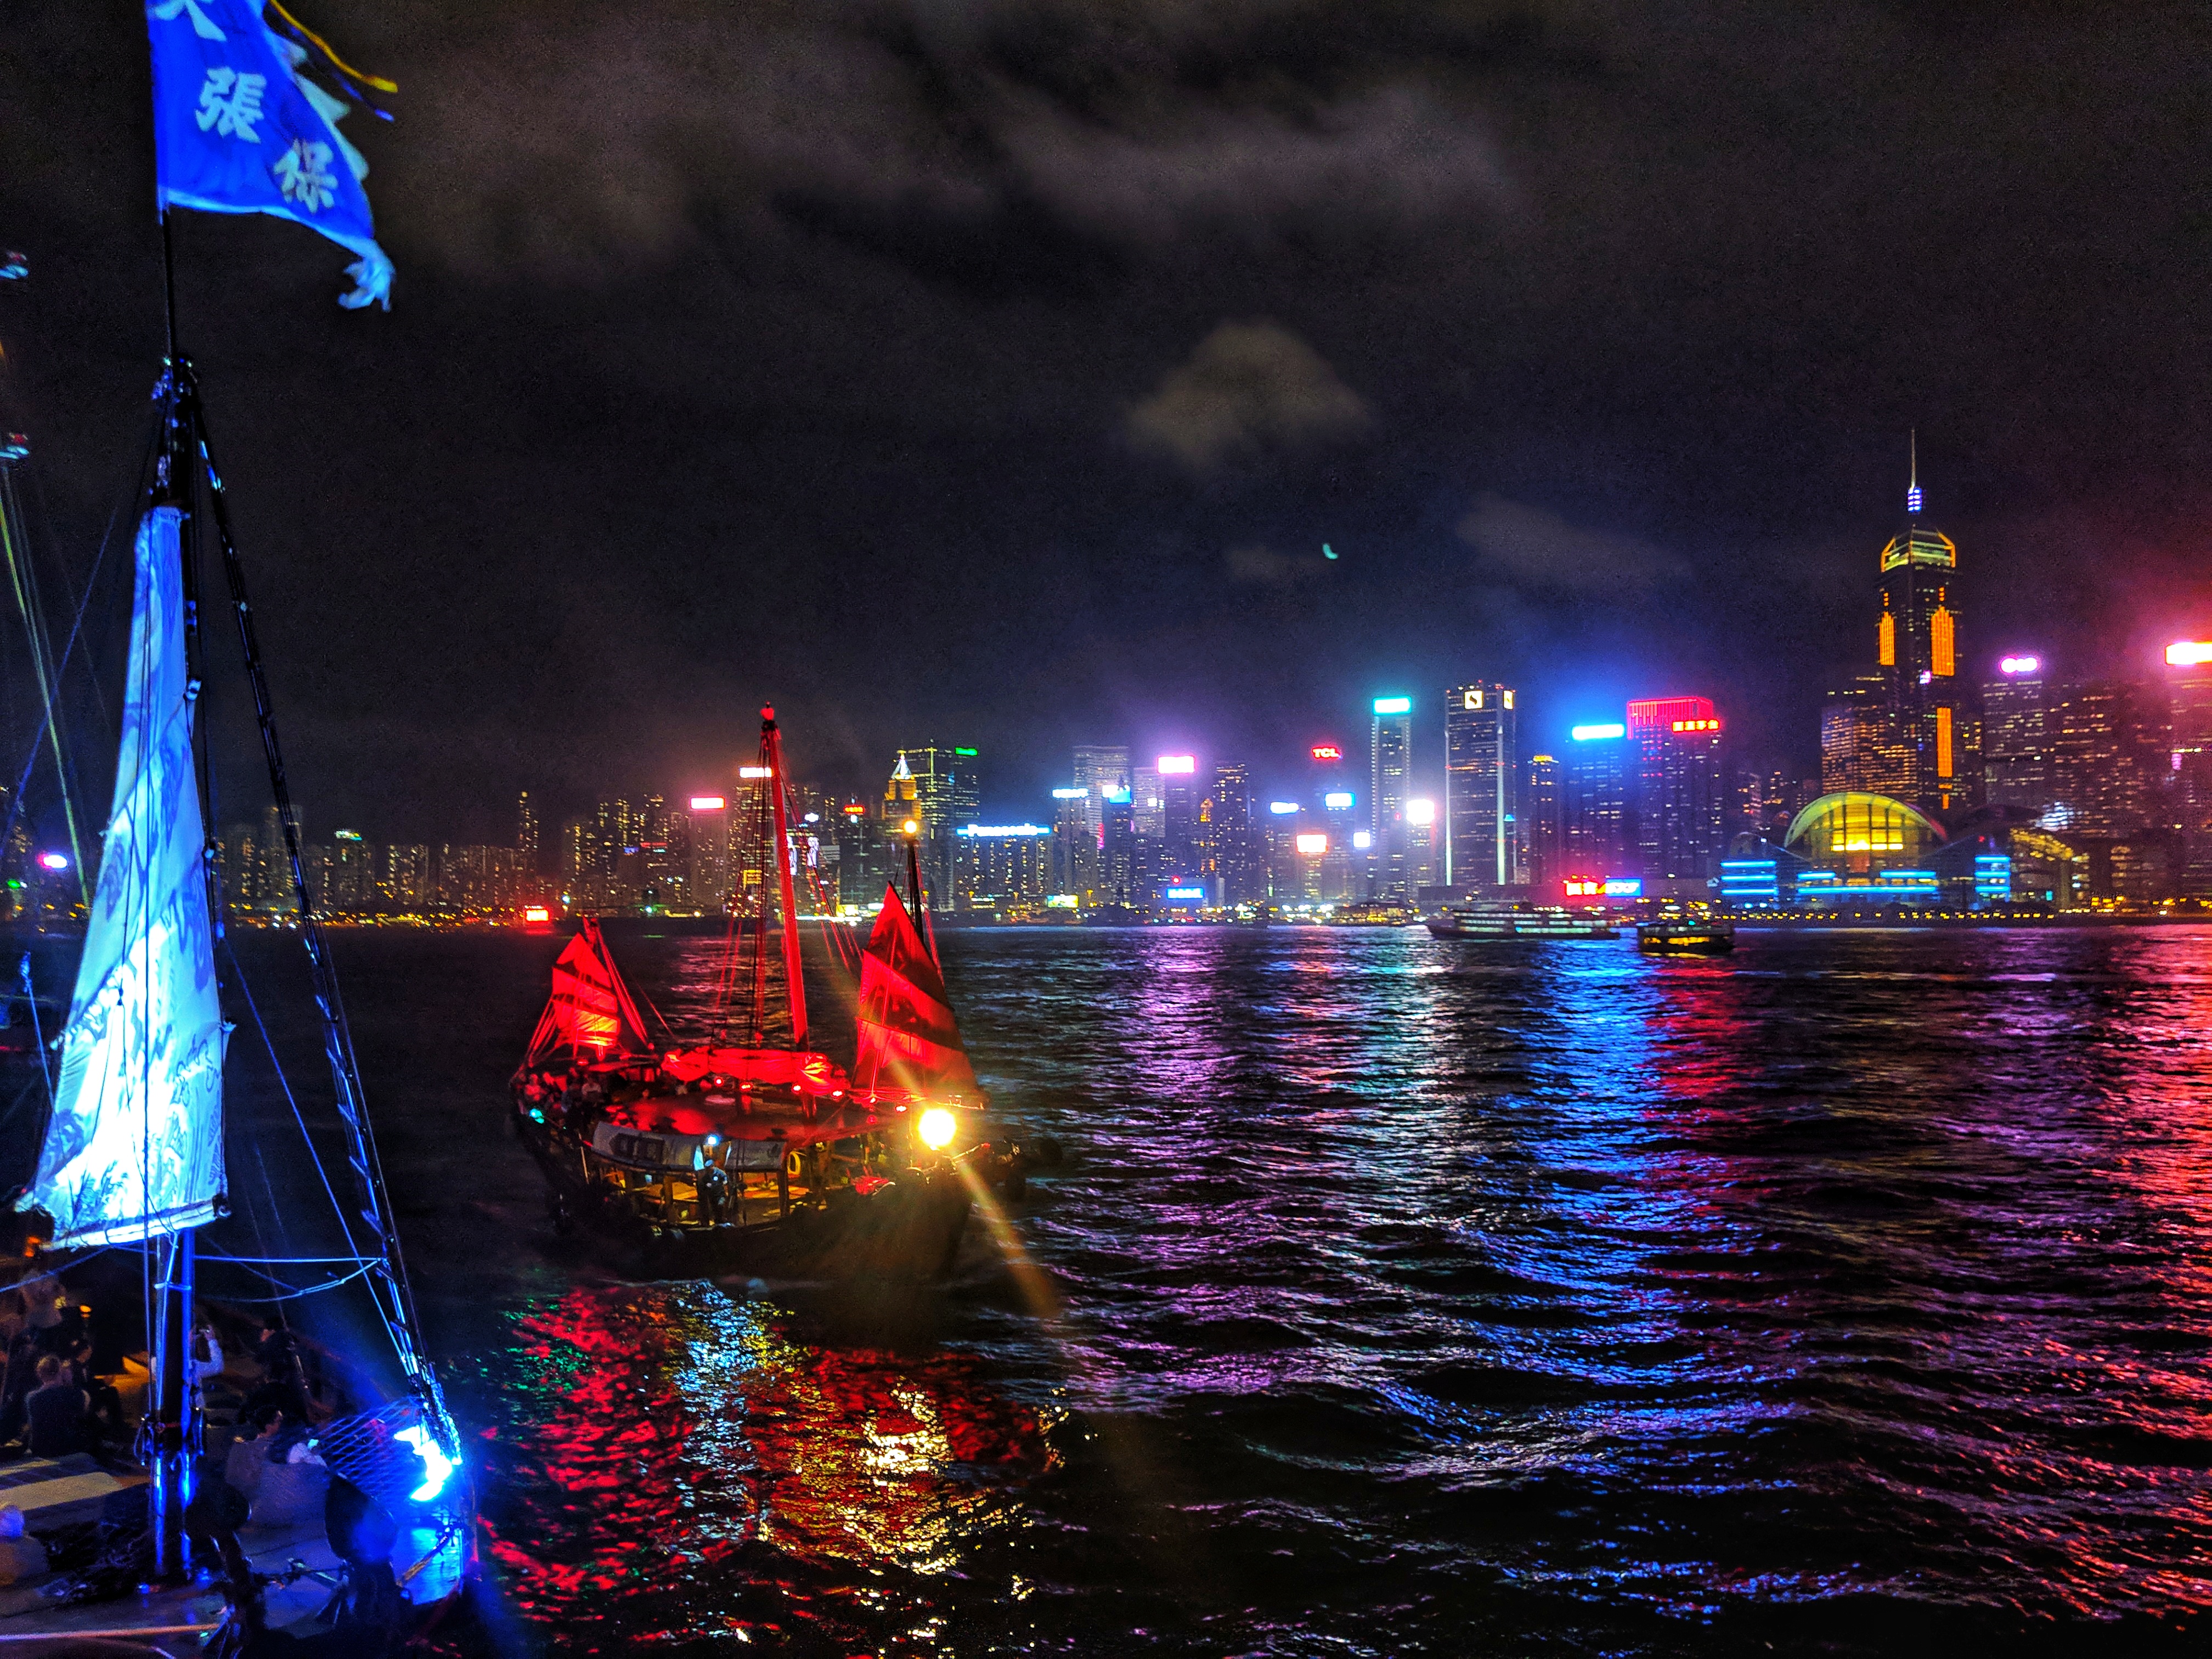 Traditional fishing boat in Victoria Bay, Hong Kong lit up at night